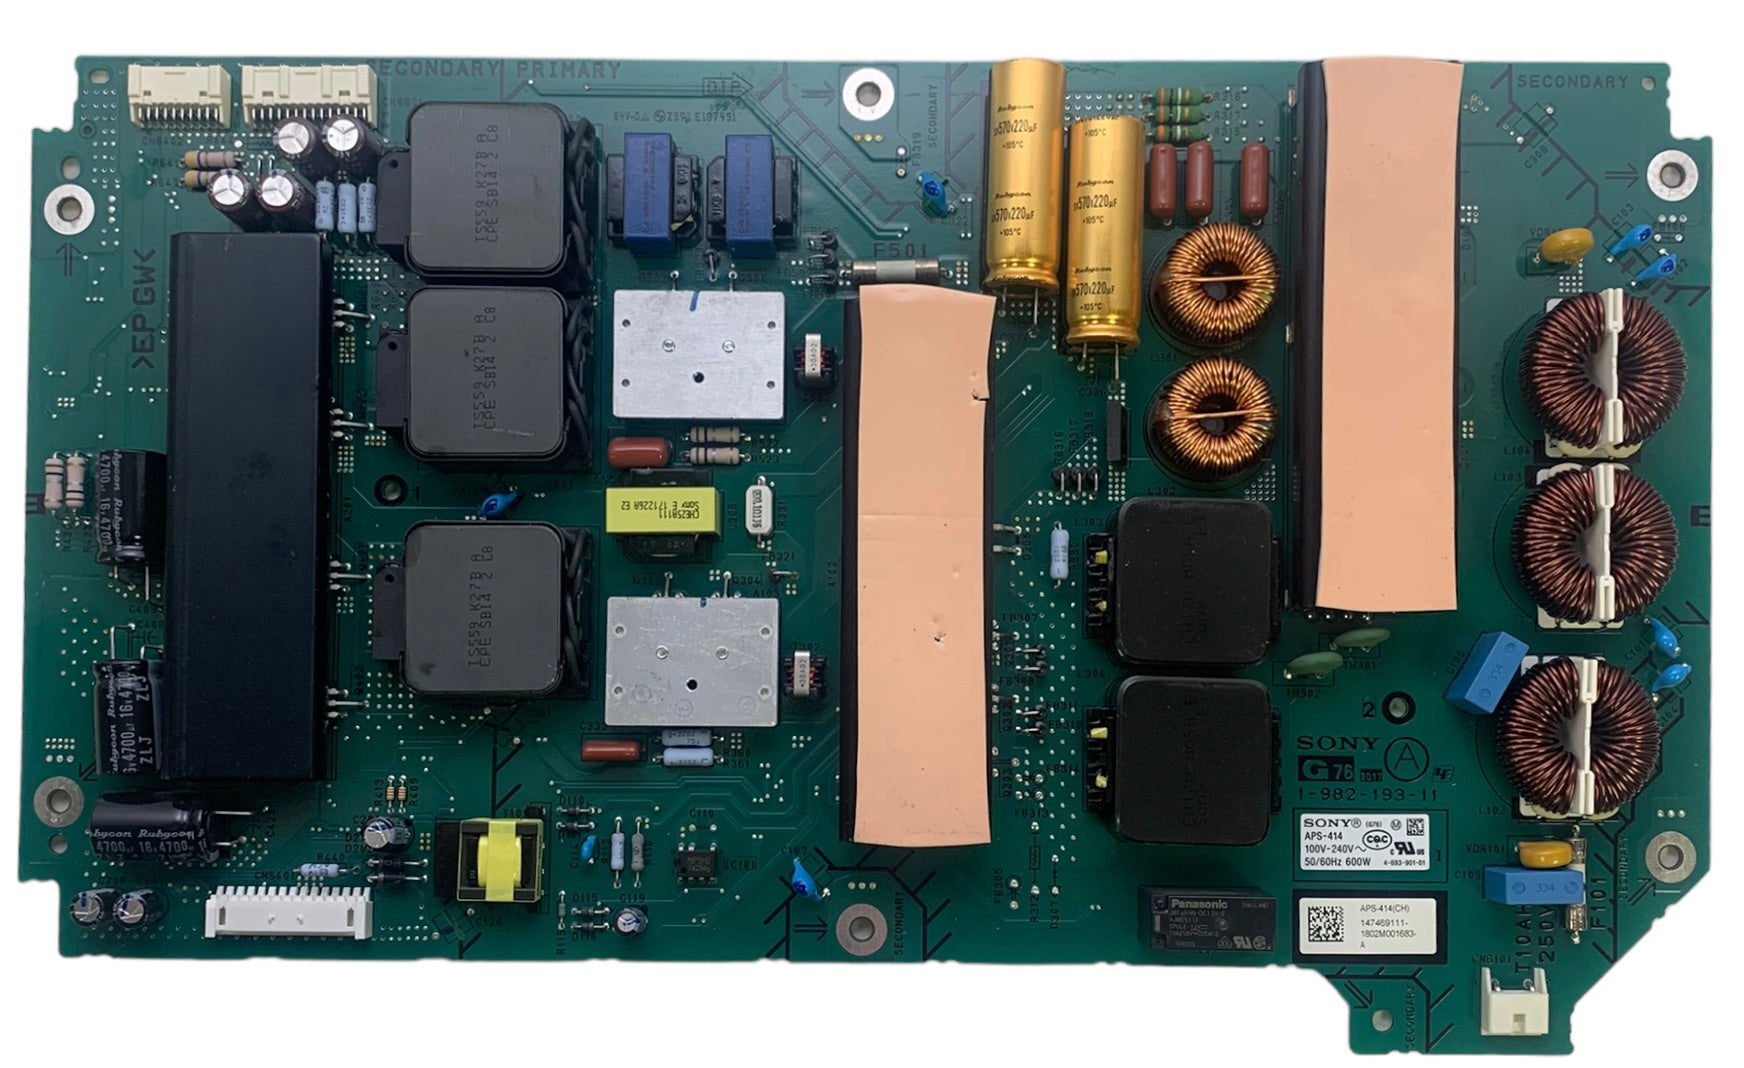 Sony 1-474-691-11 G76 Static Converter Power Supply Board